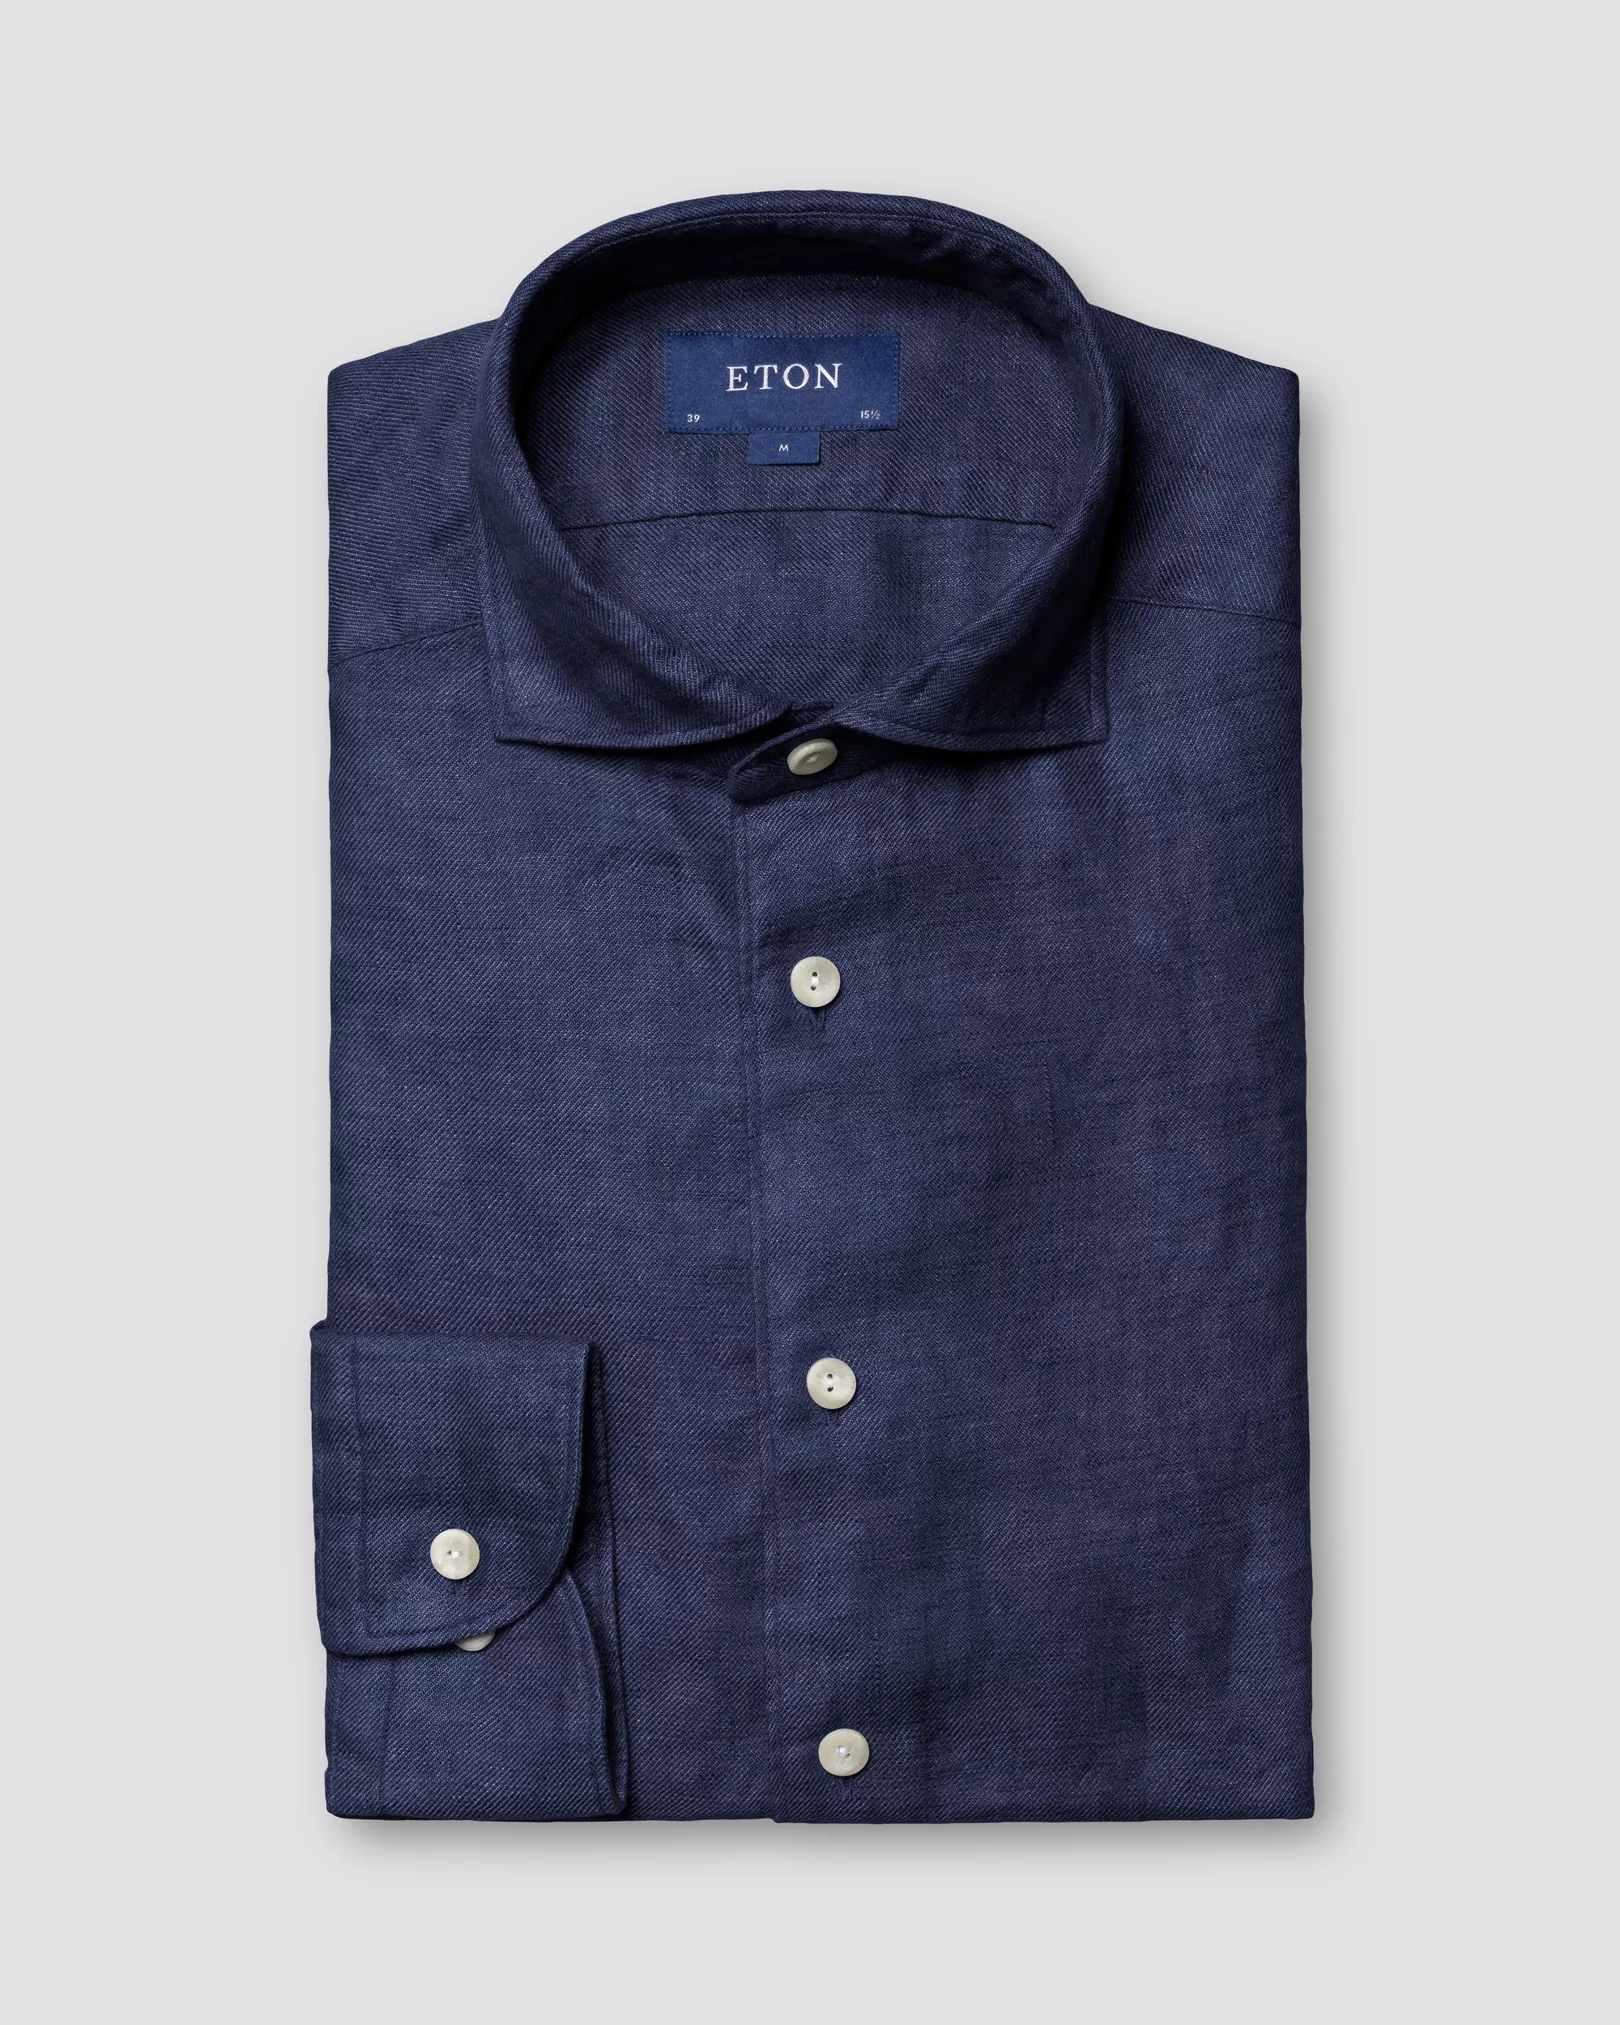 Eton - navy blue linen